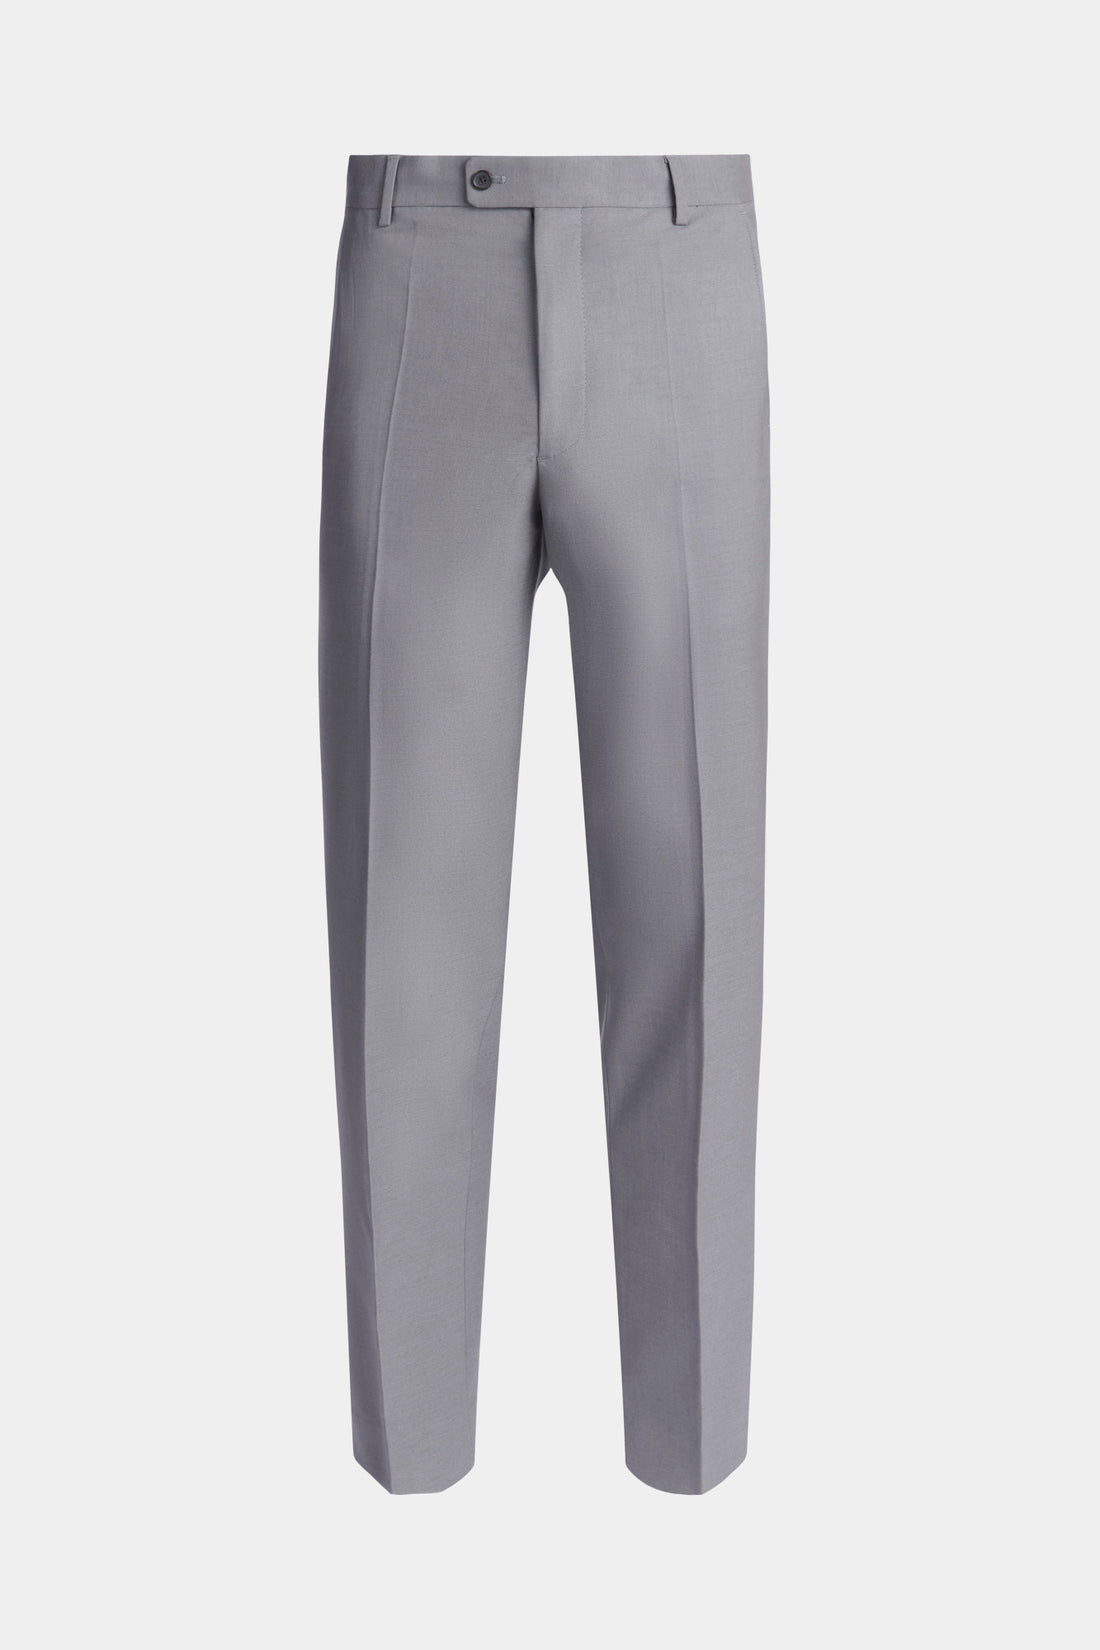 Charcoal Gray Dress Trousers | SPIER & MACKAY